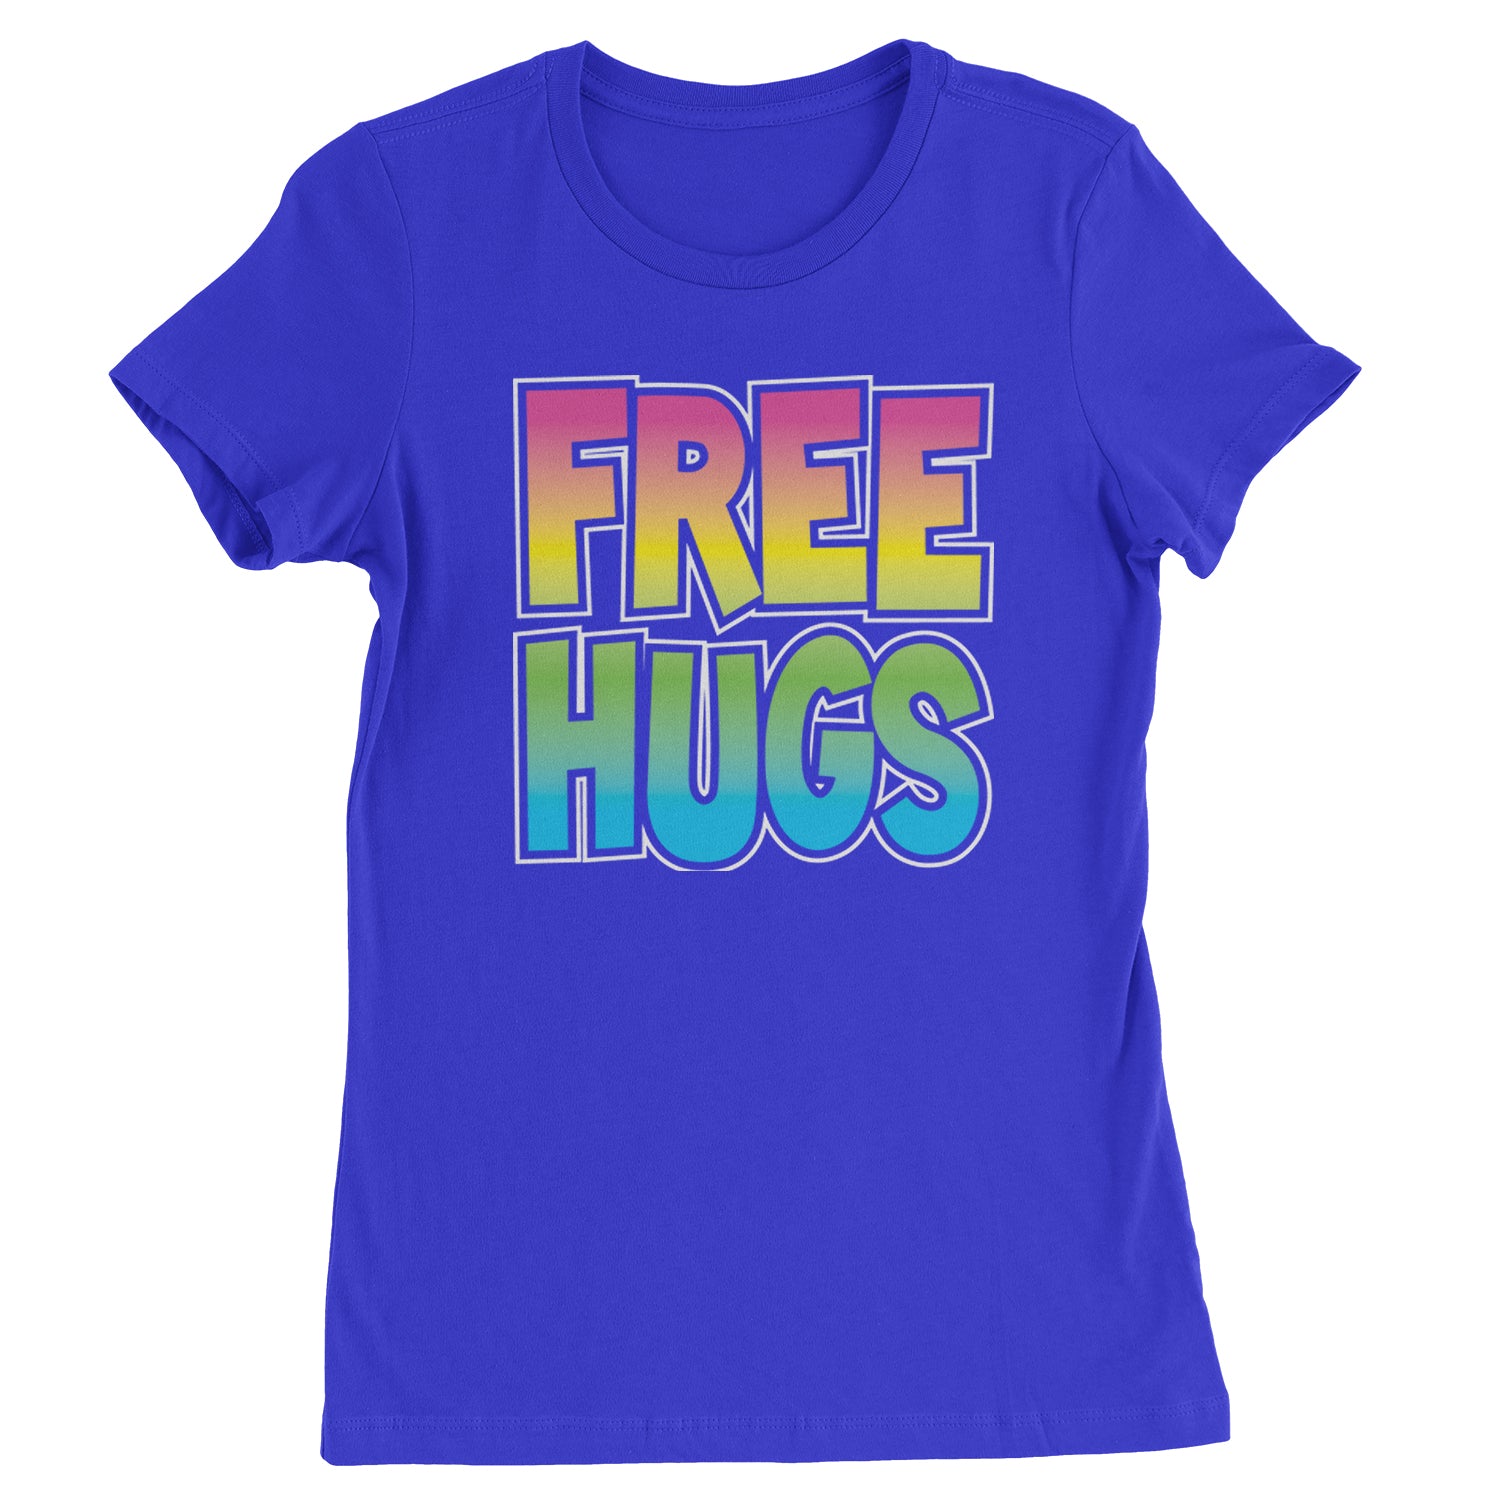 Free Hugs Womens T-shirt free, hugger, hugging, hugs by Expression Tees